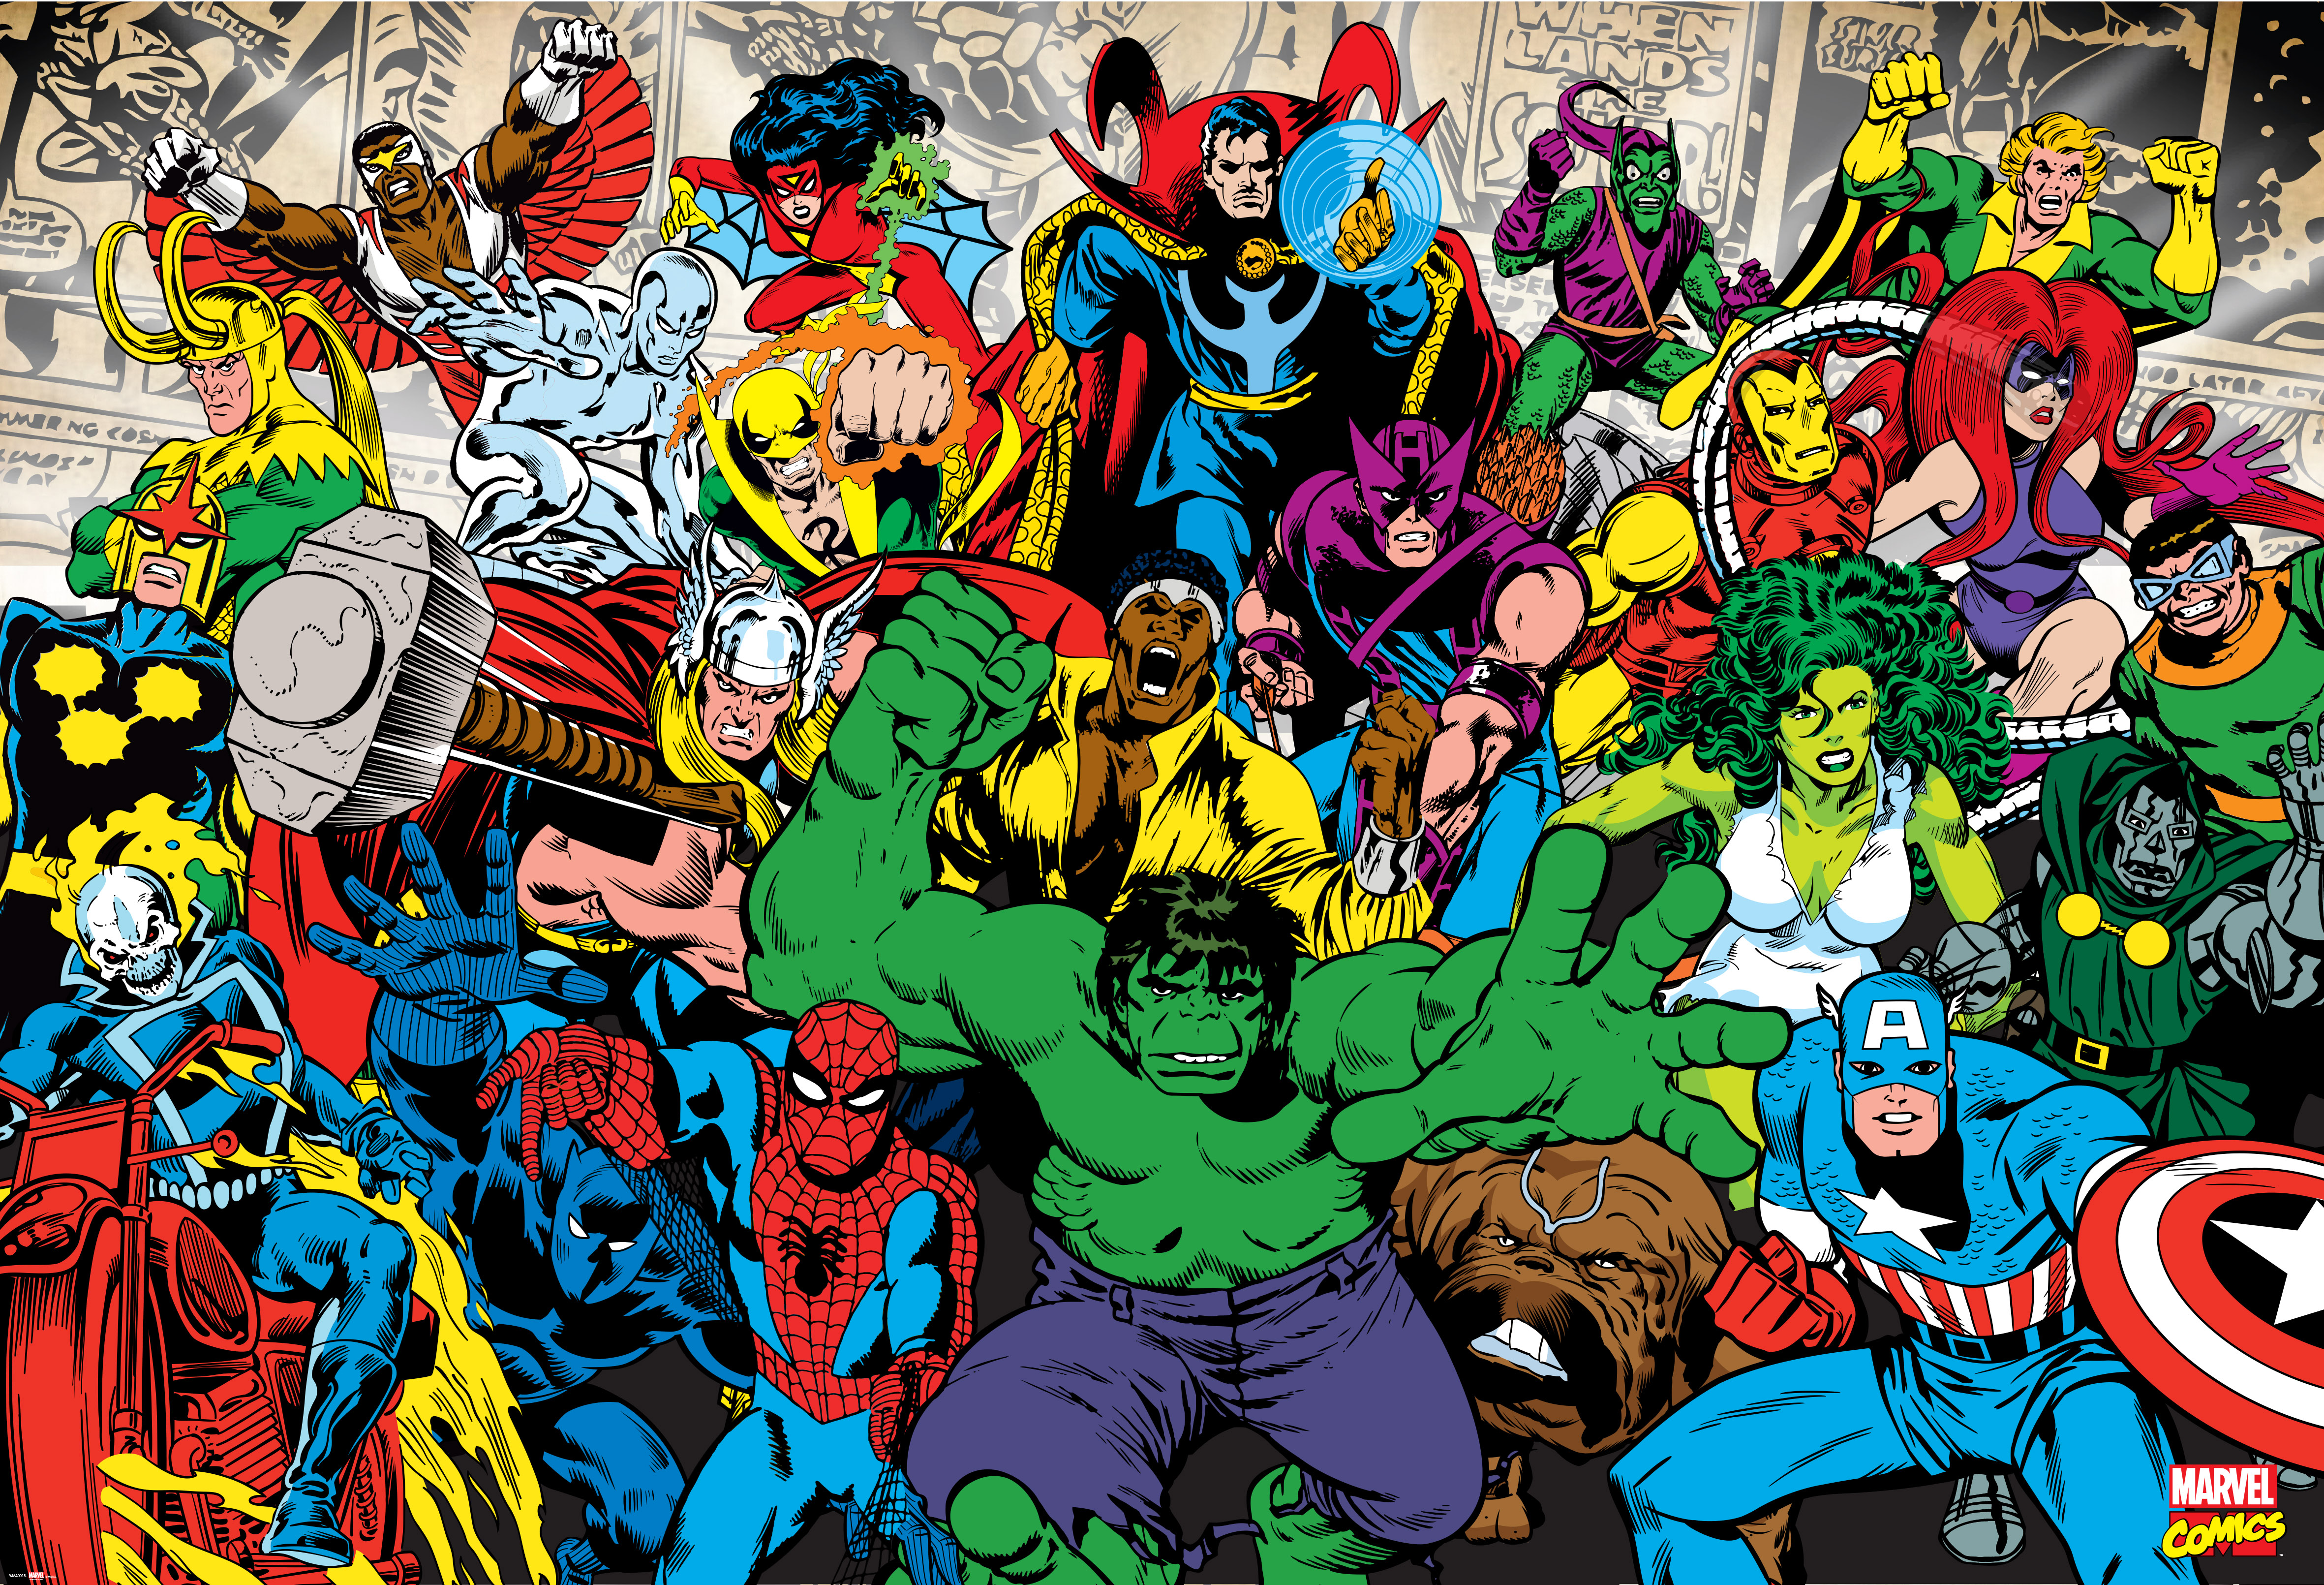 Marvel Characters Wallpaper